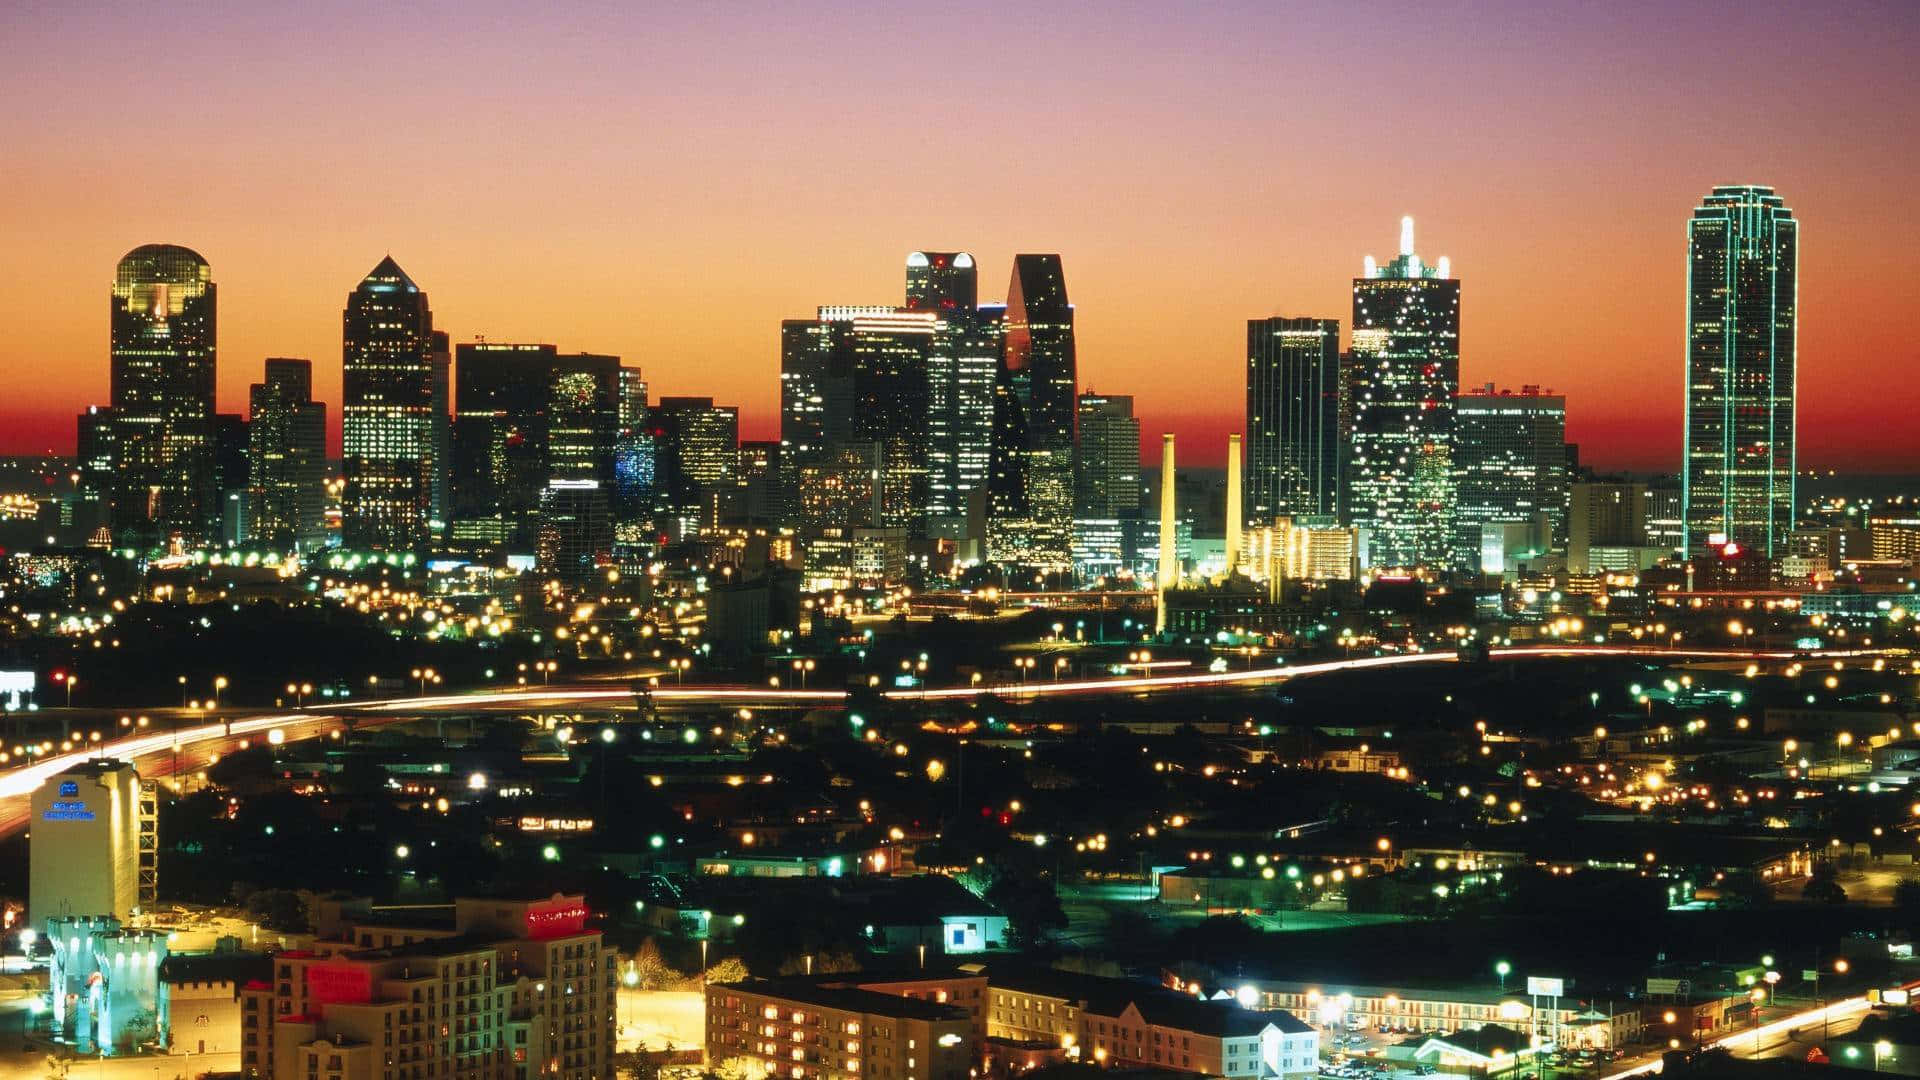 "The Magnificent City of Dallas, Texas" Wallpaper